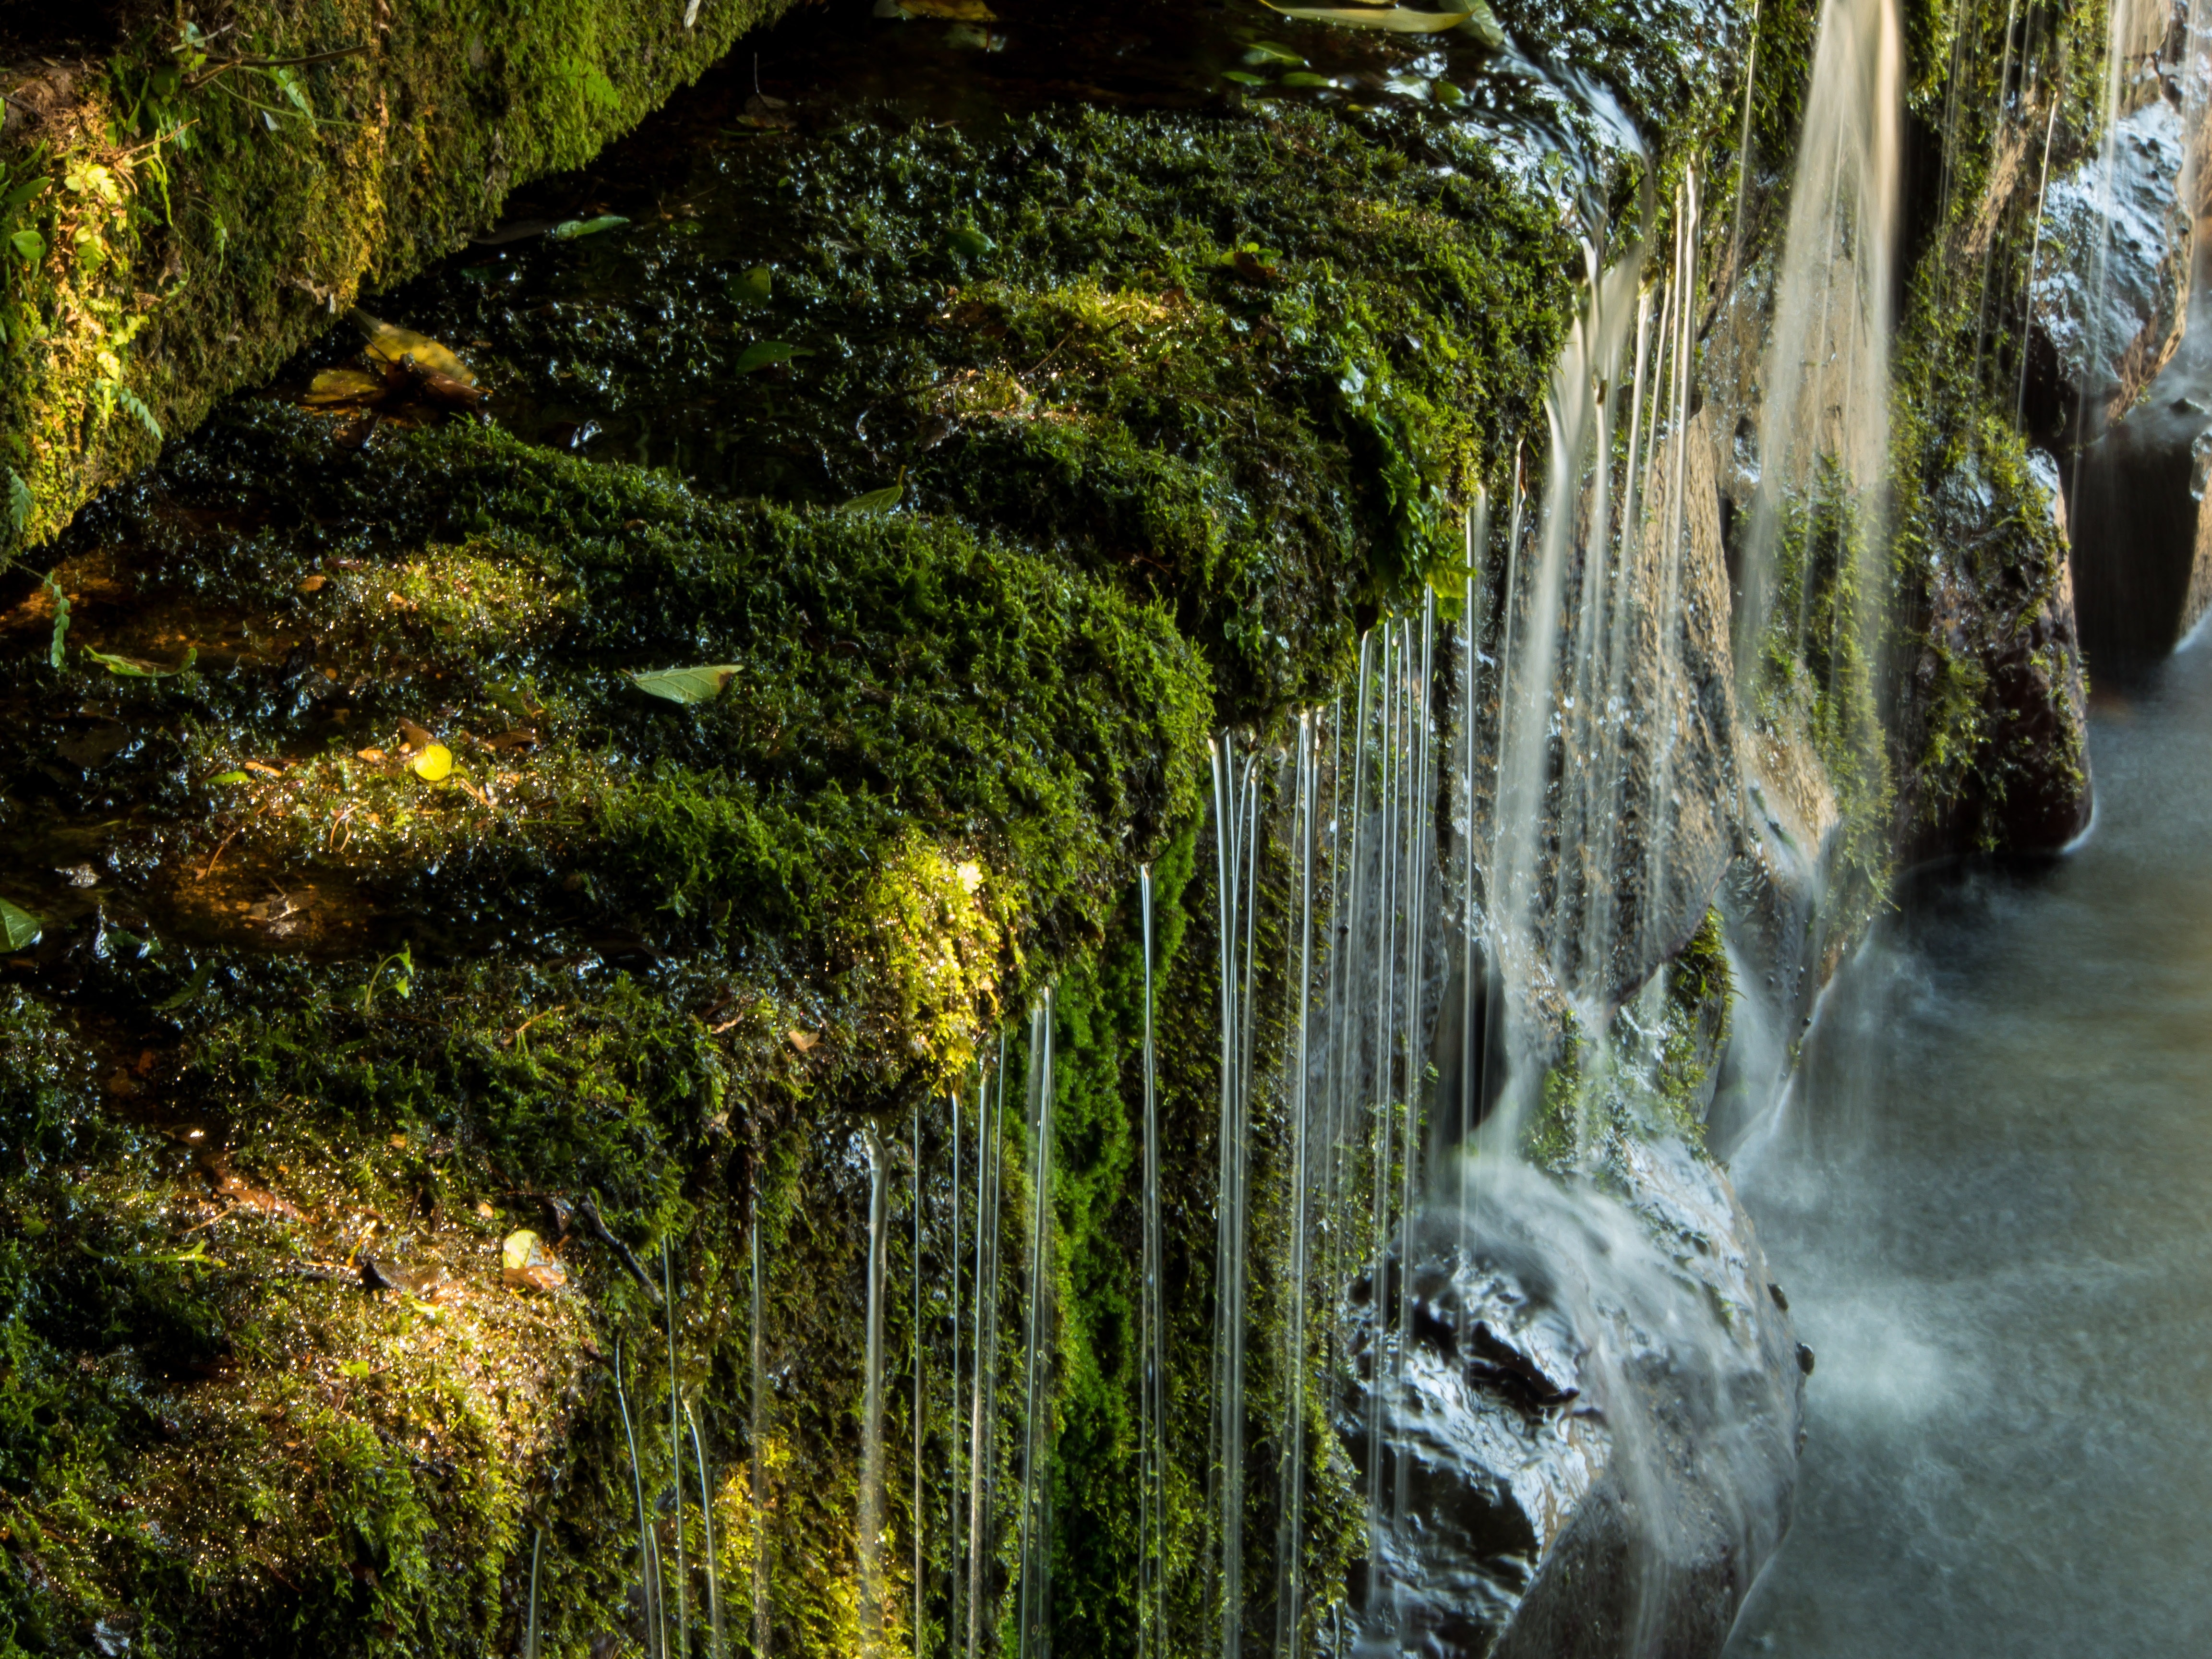 water falls between rocks